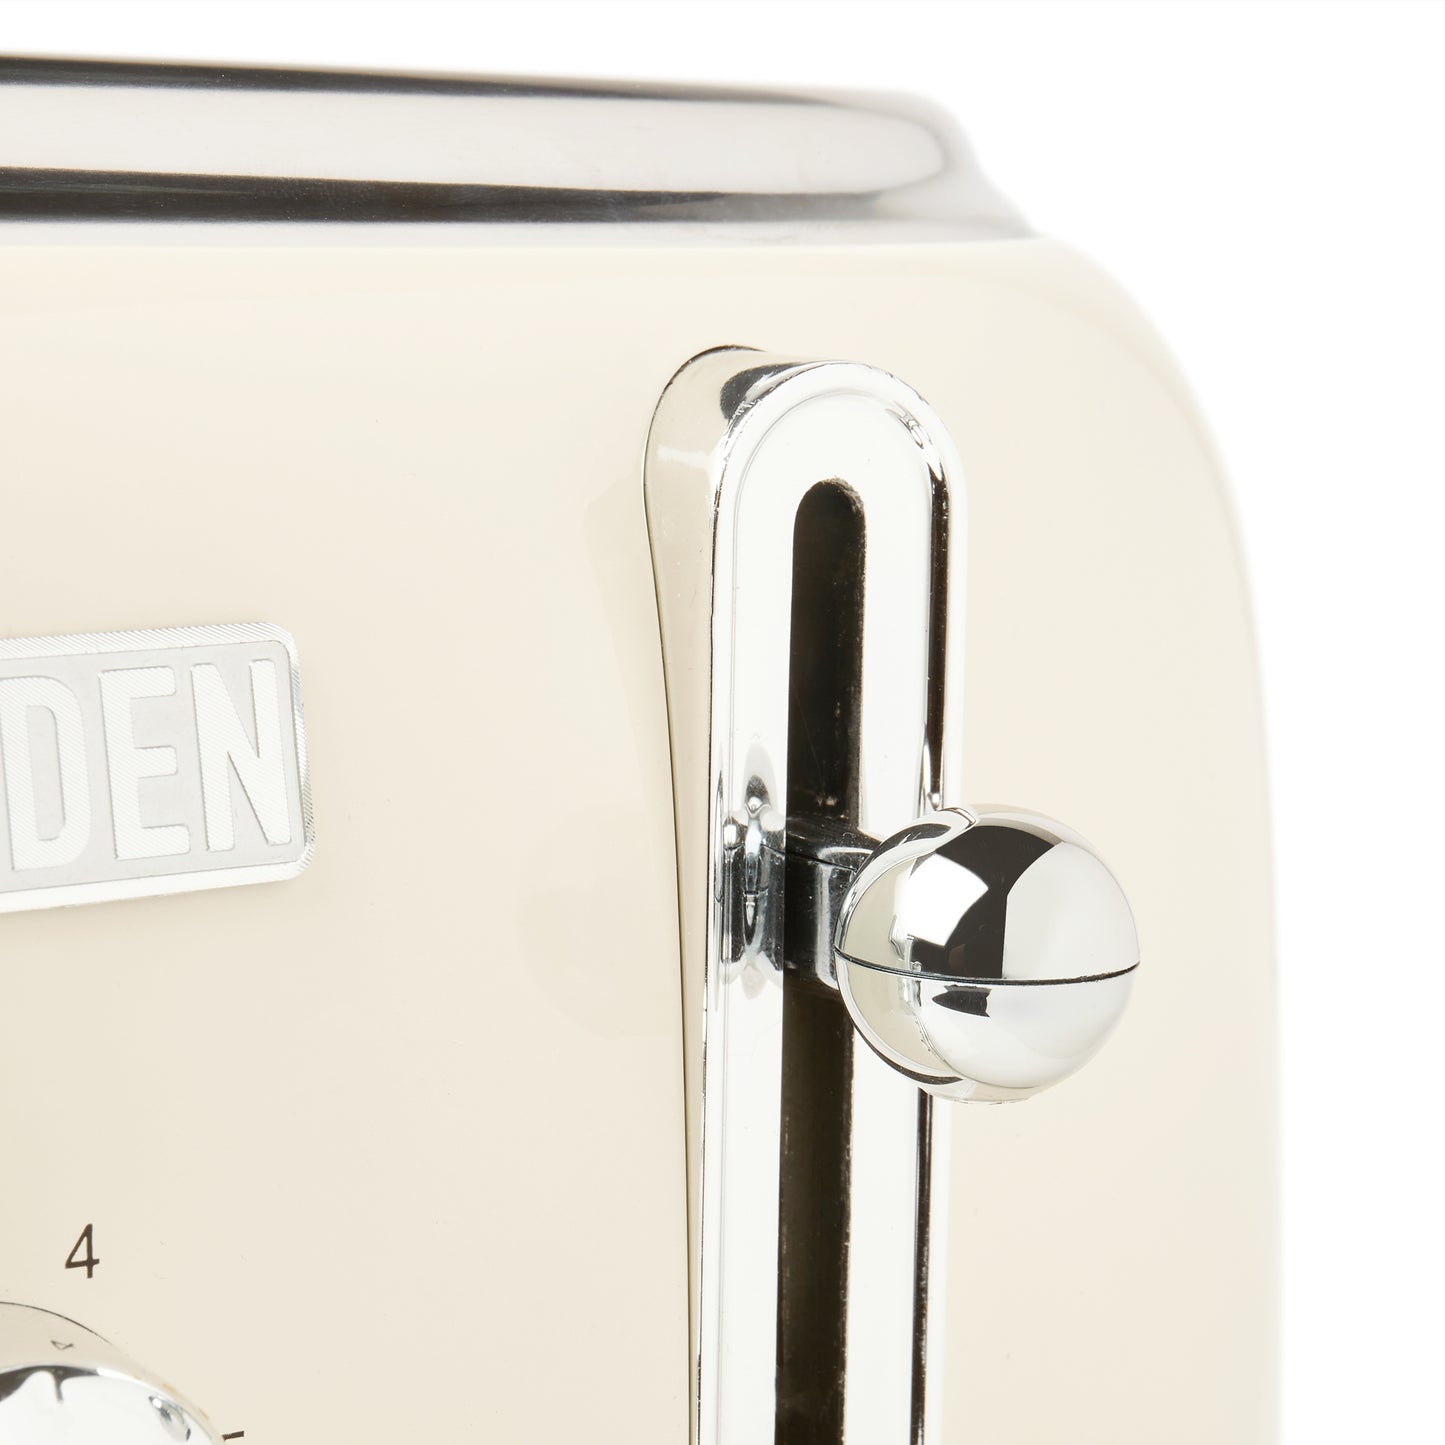 Haden Highclere Cream 4 Slice Toaster